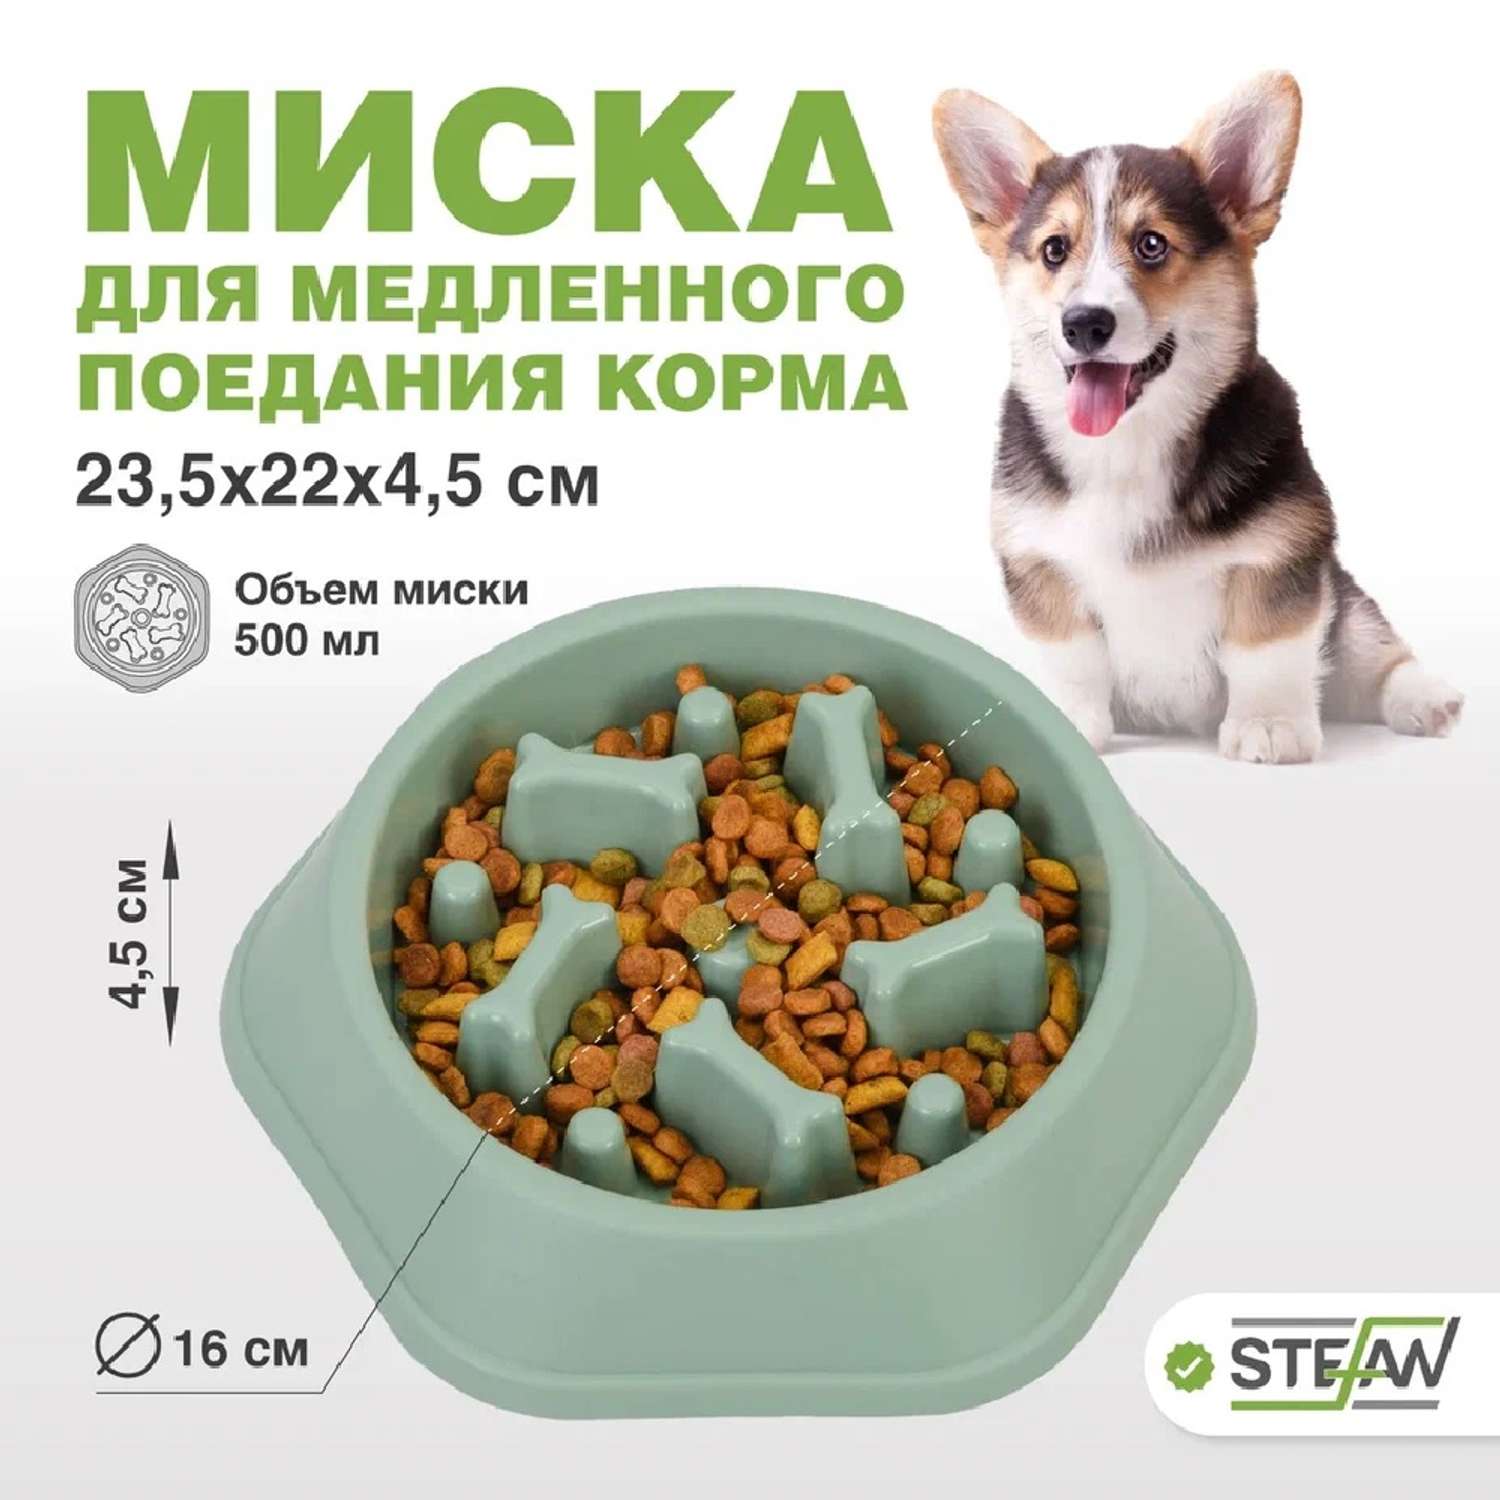 Миска для собак Stefan для медленного поедания 23.5х22х4.5 500мл зеленая - фото 1